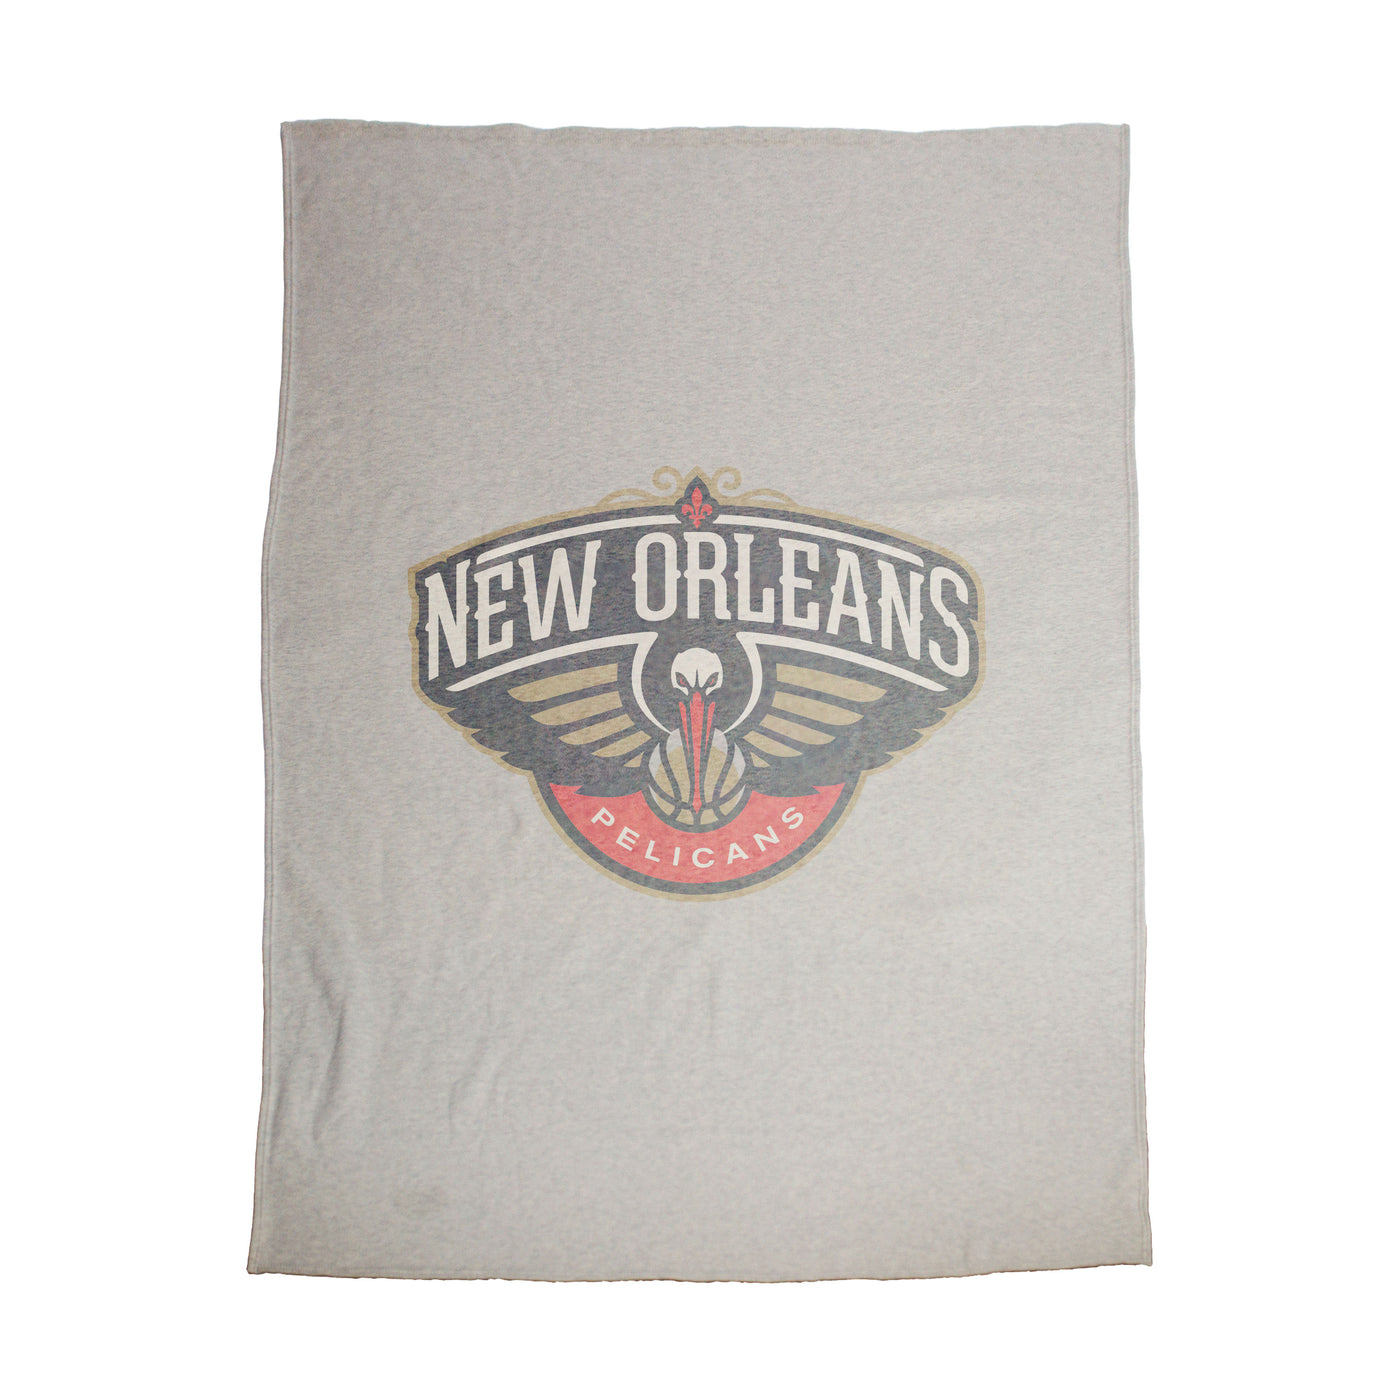 New Orleans Pelicans Oversized Logo Sublimated Sweatshirt Blanket